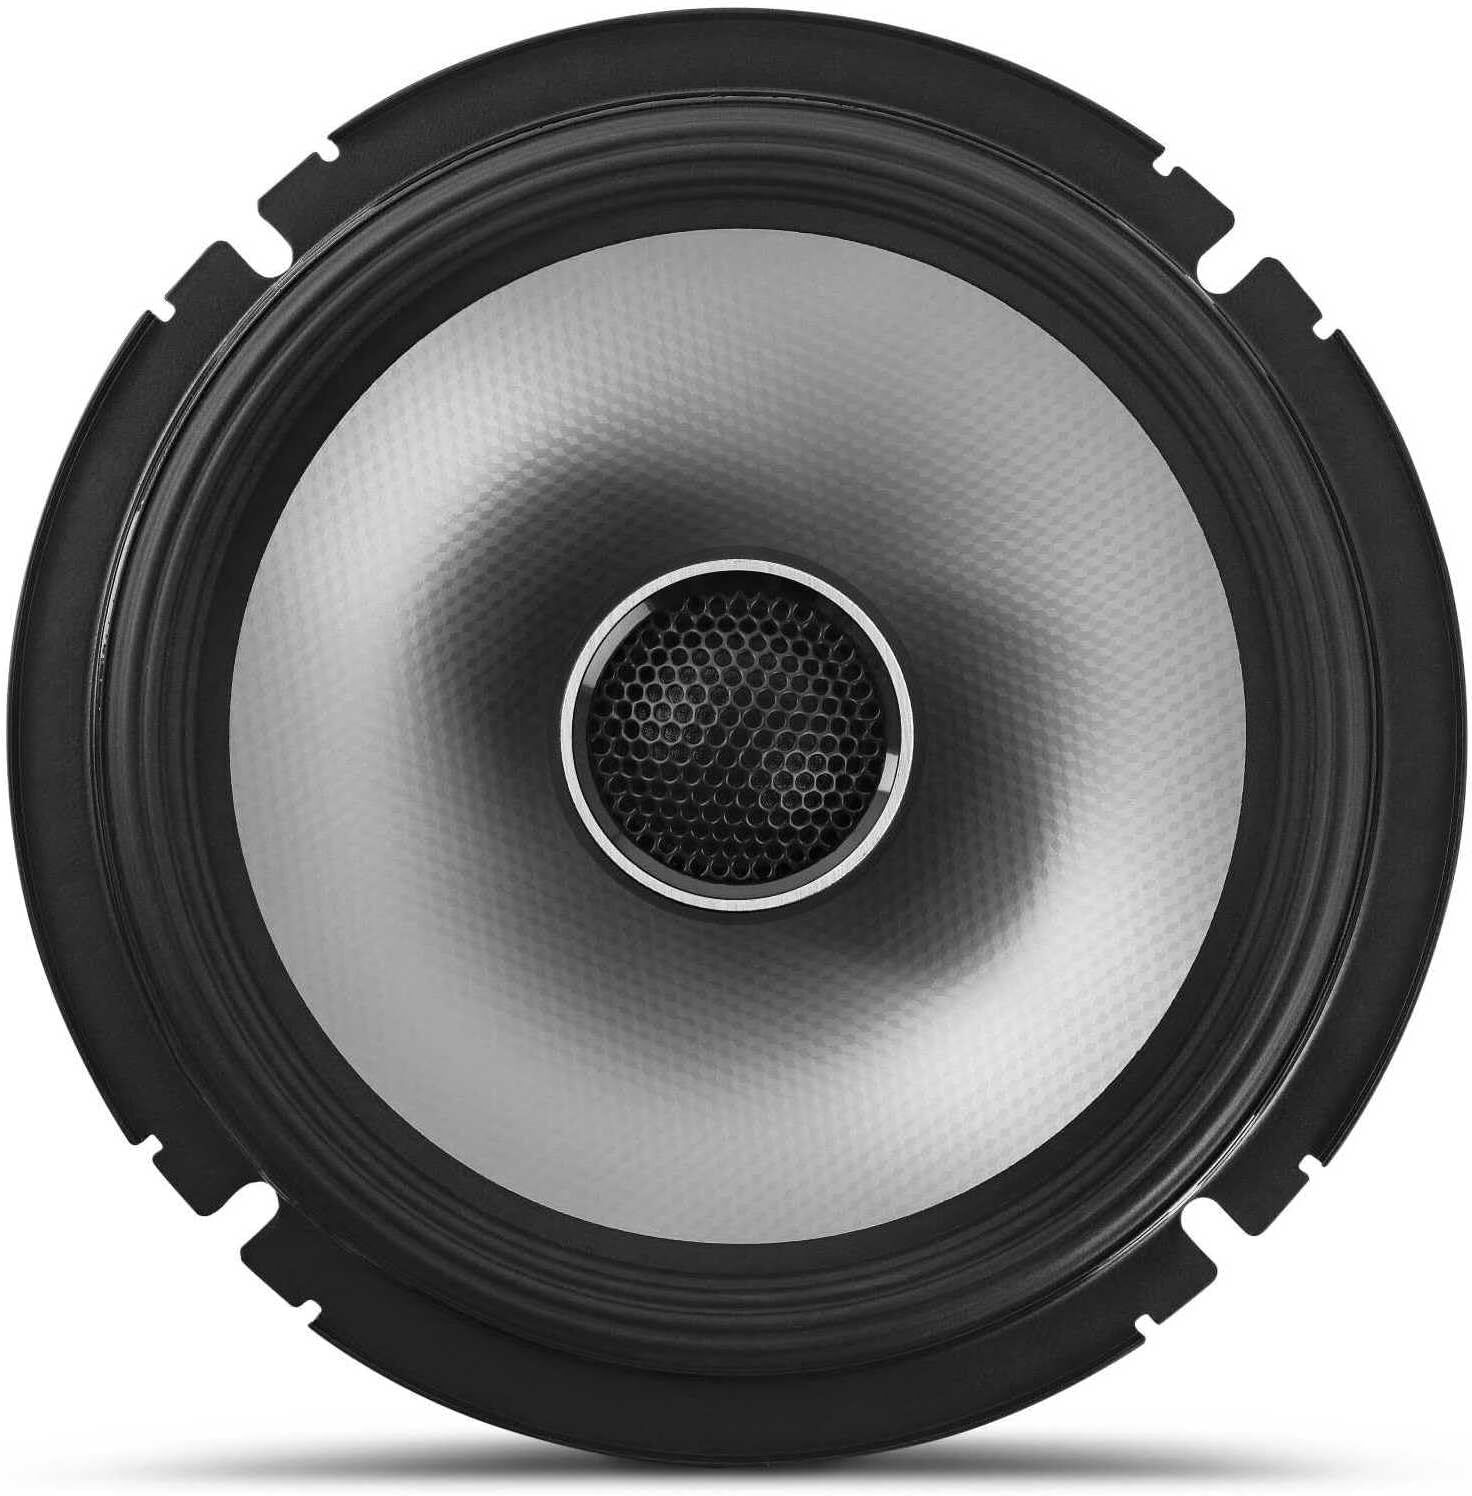 2 Alpine S2-S65 6.5" 480 Watts S-Series Hi-Res Certified 2Way Coaxial Car Speakers